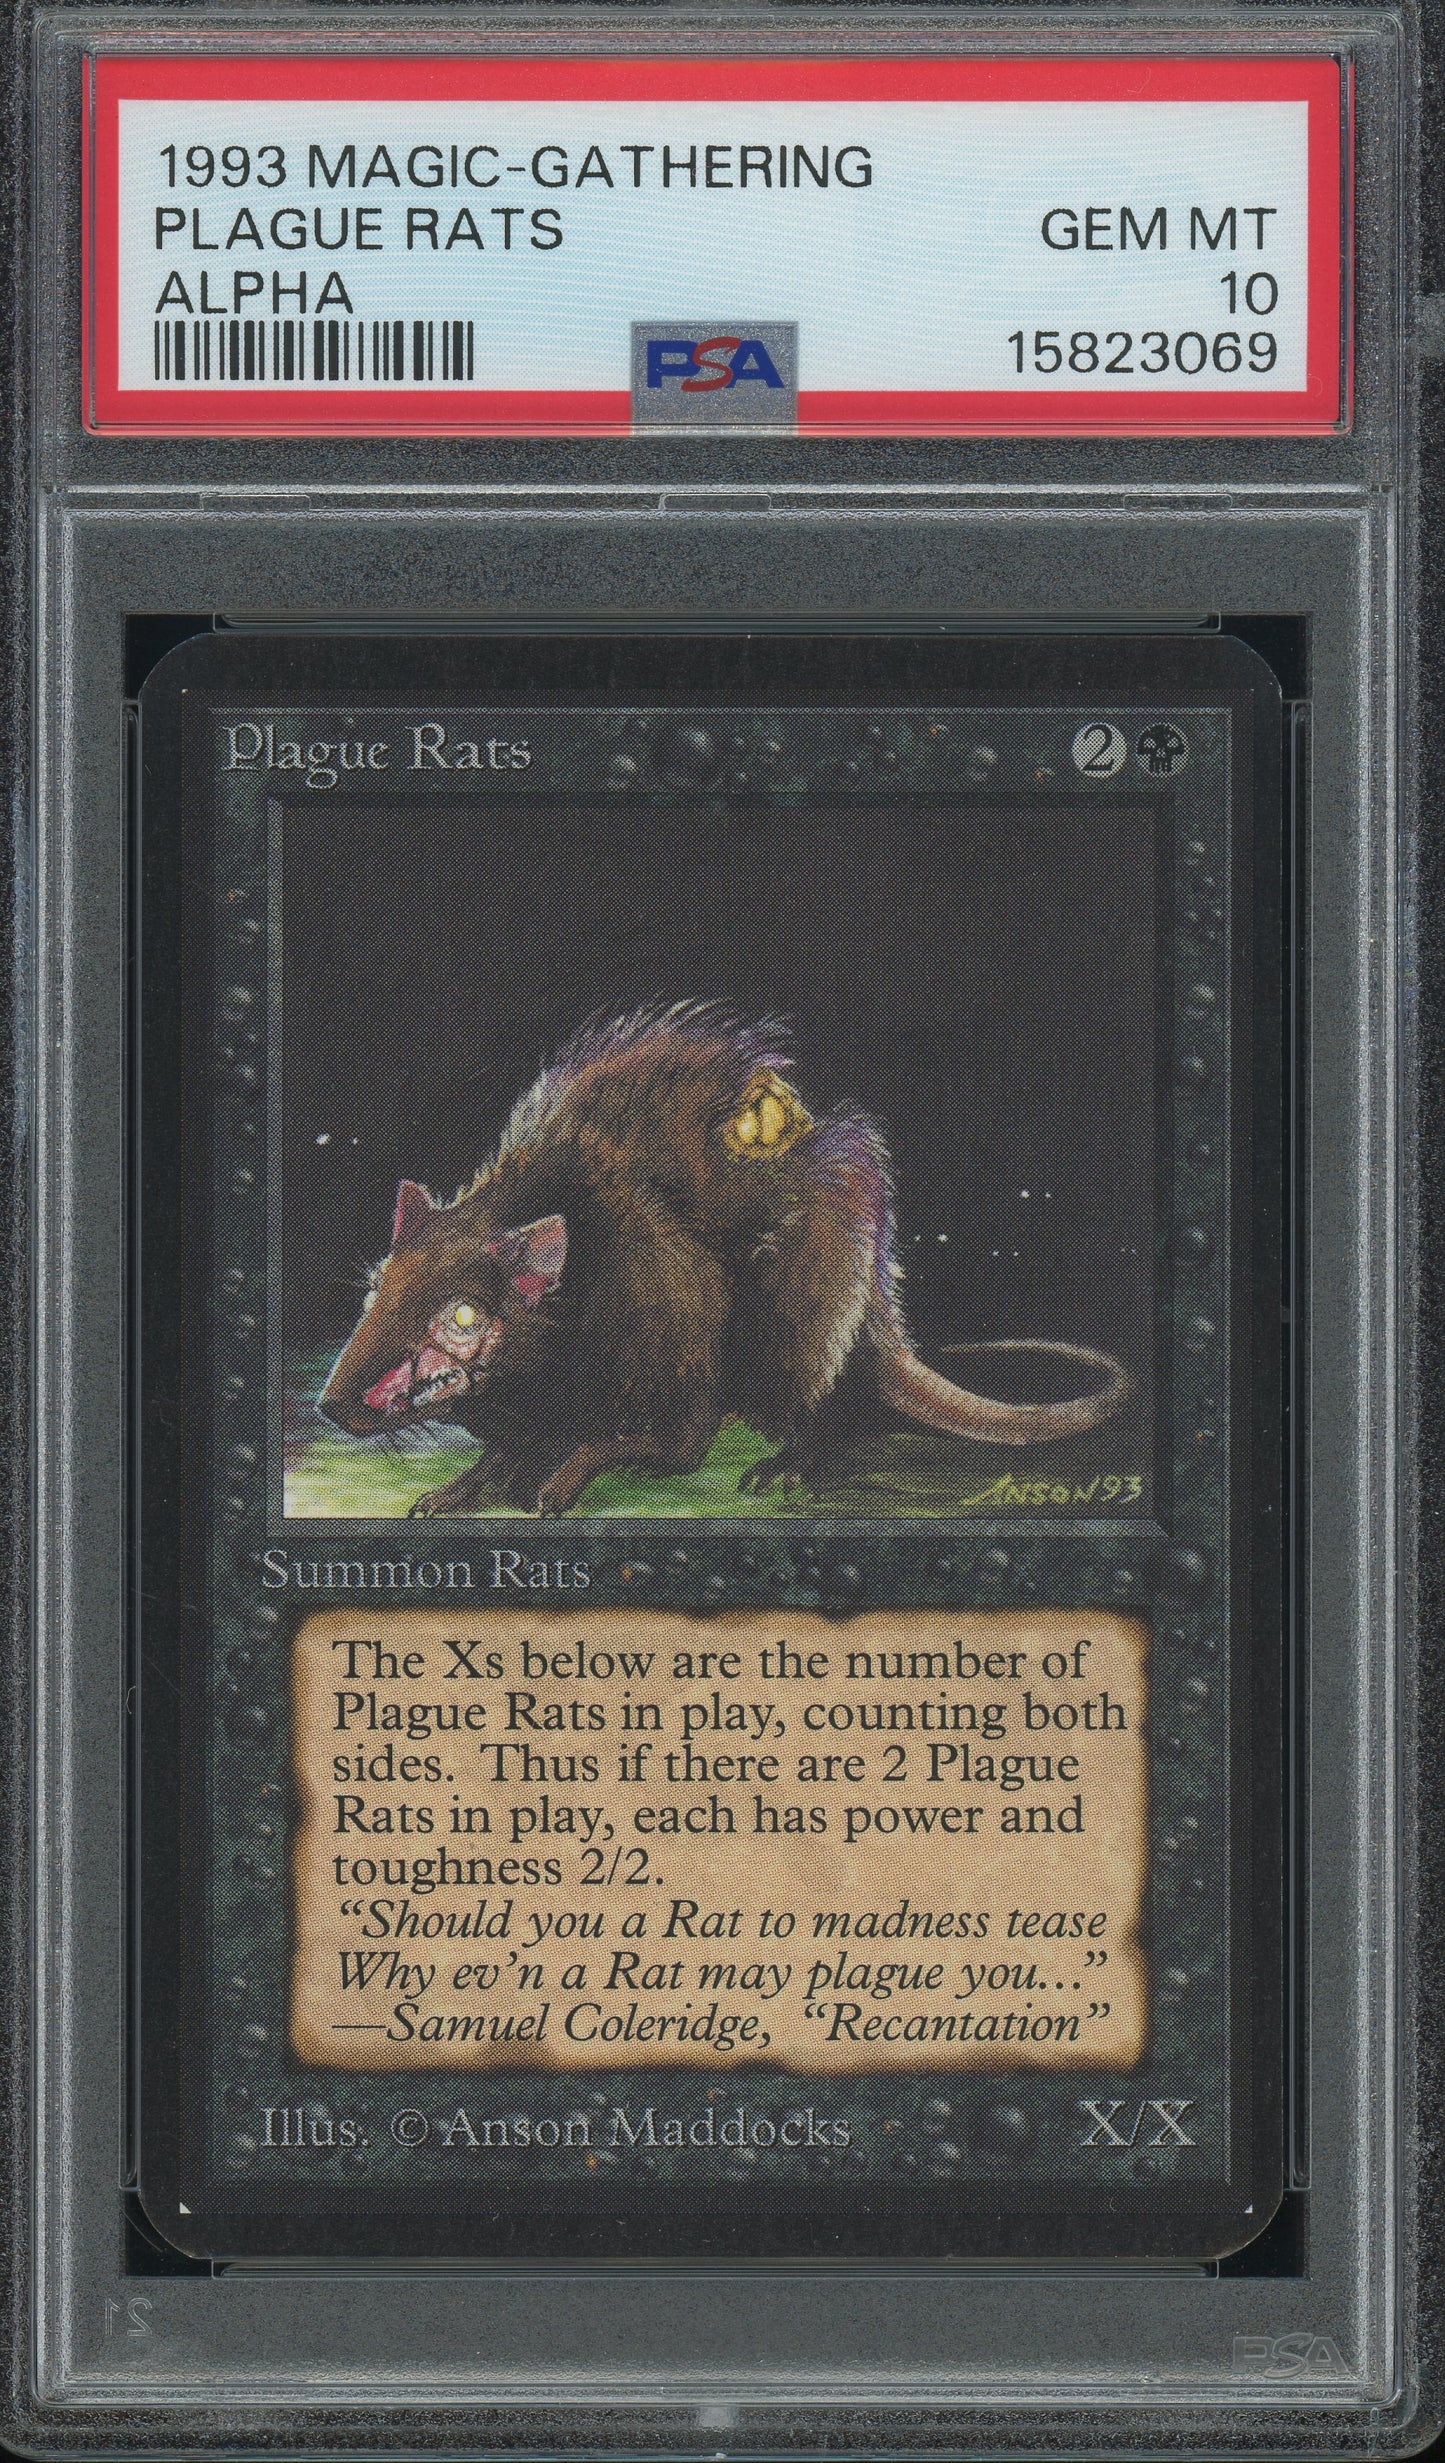 Plague Rats - Alpha PSA 10 - 15823069